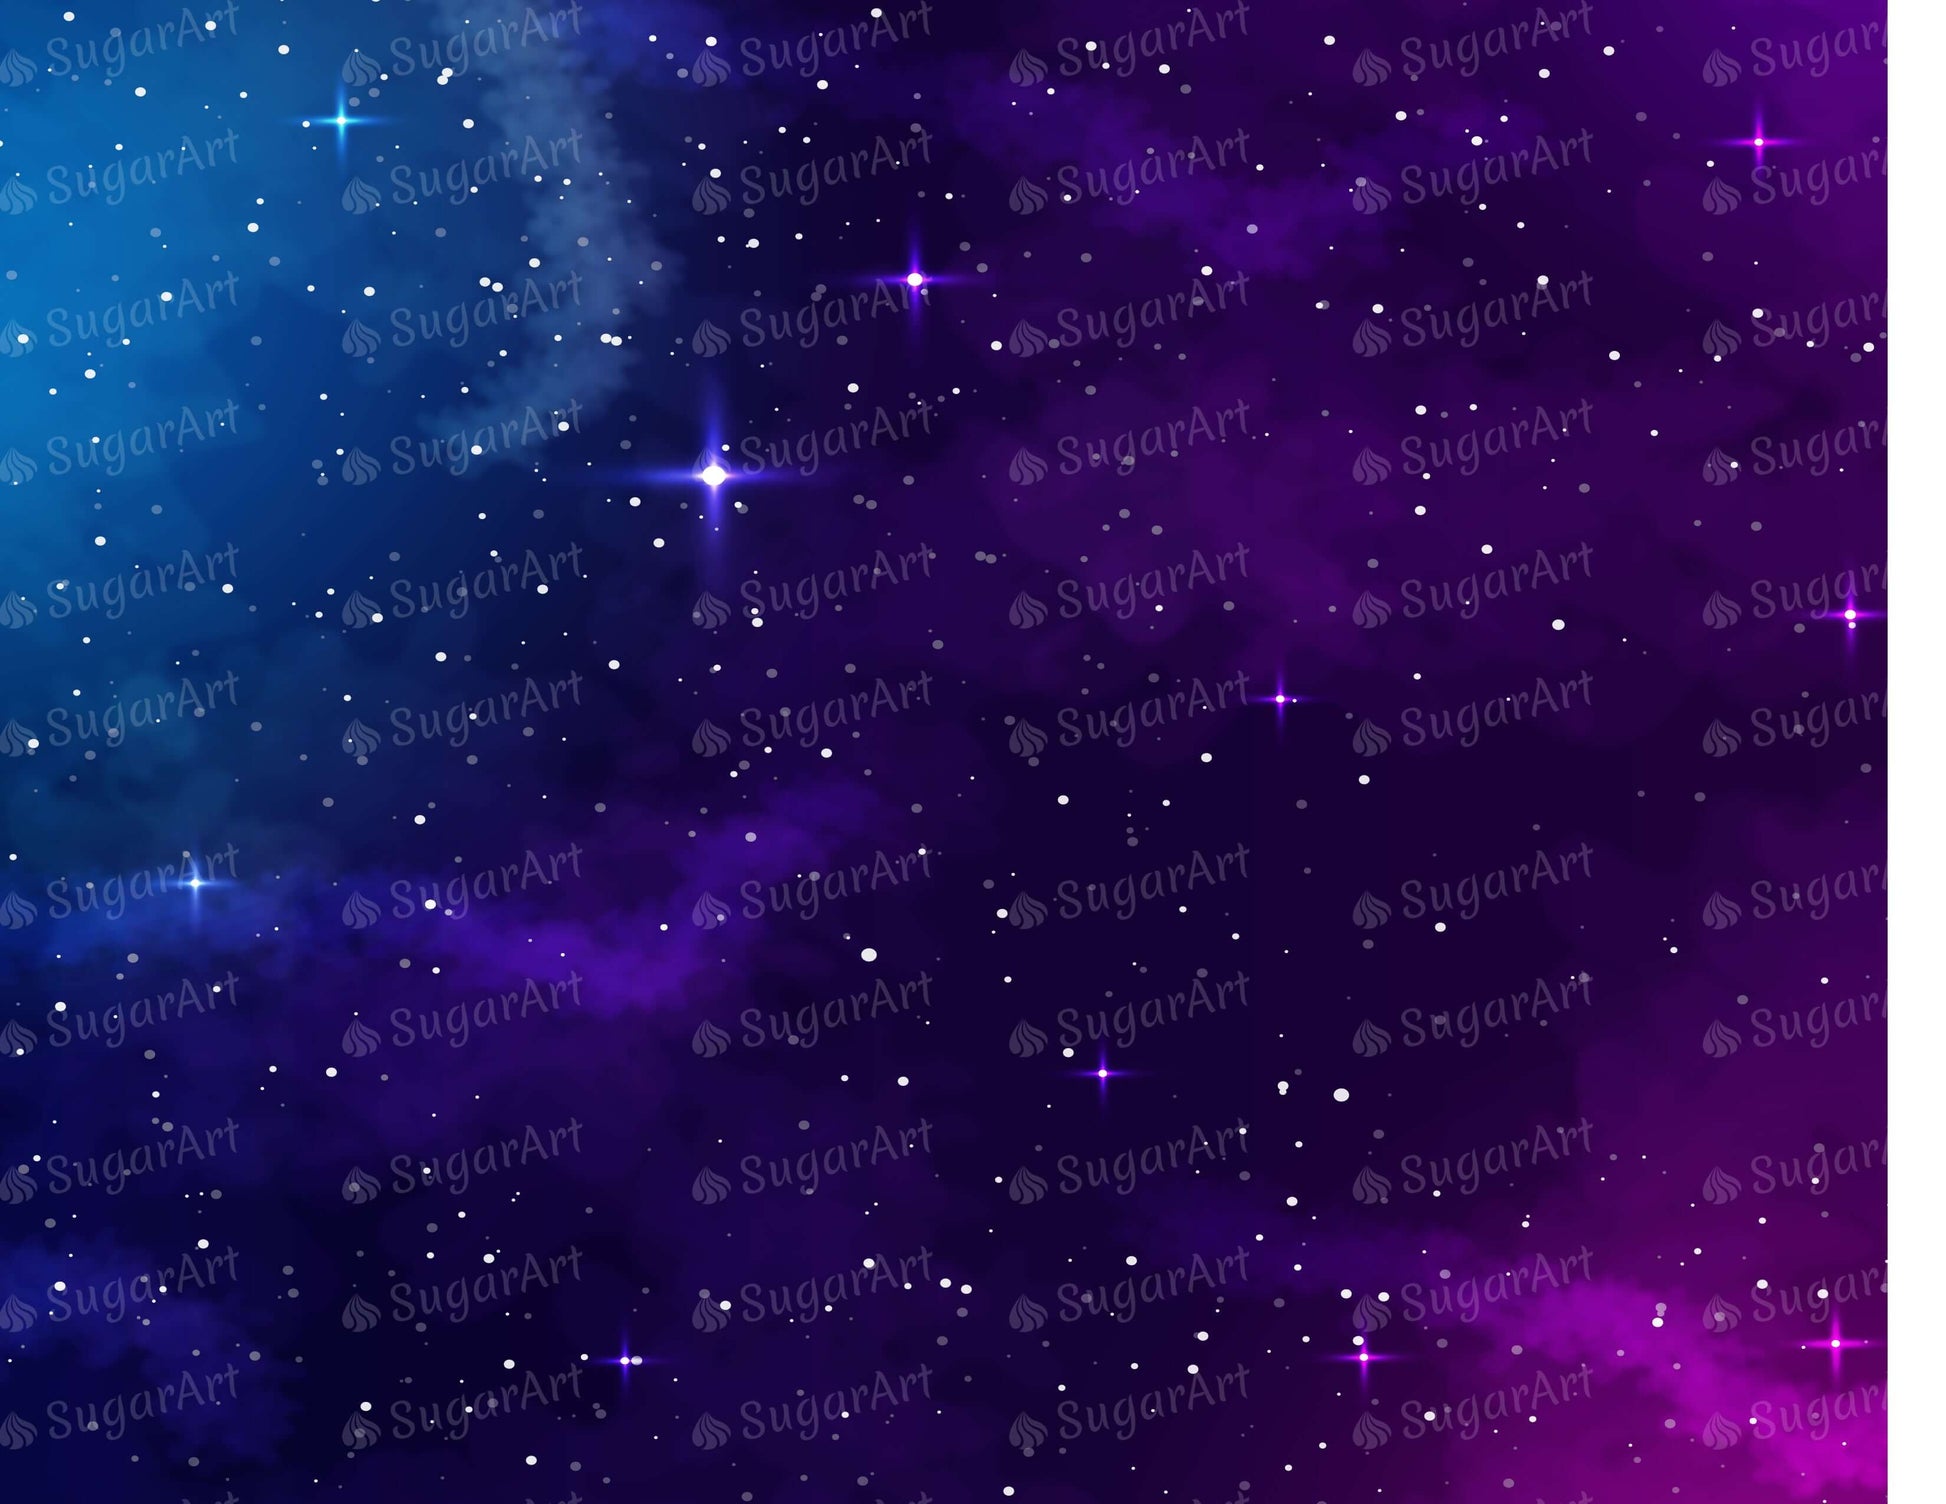 purple real stars background